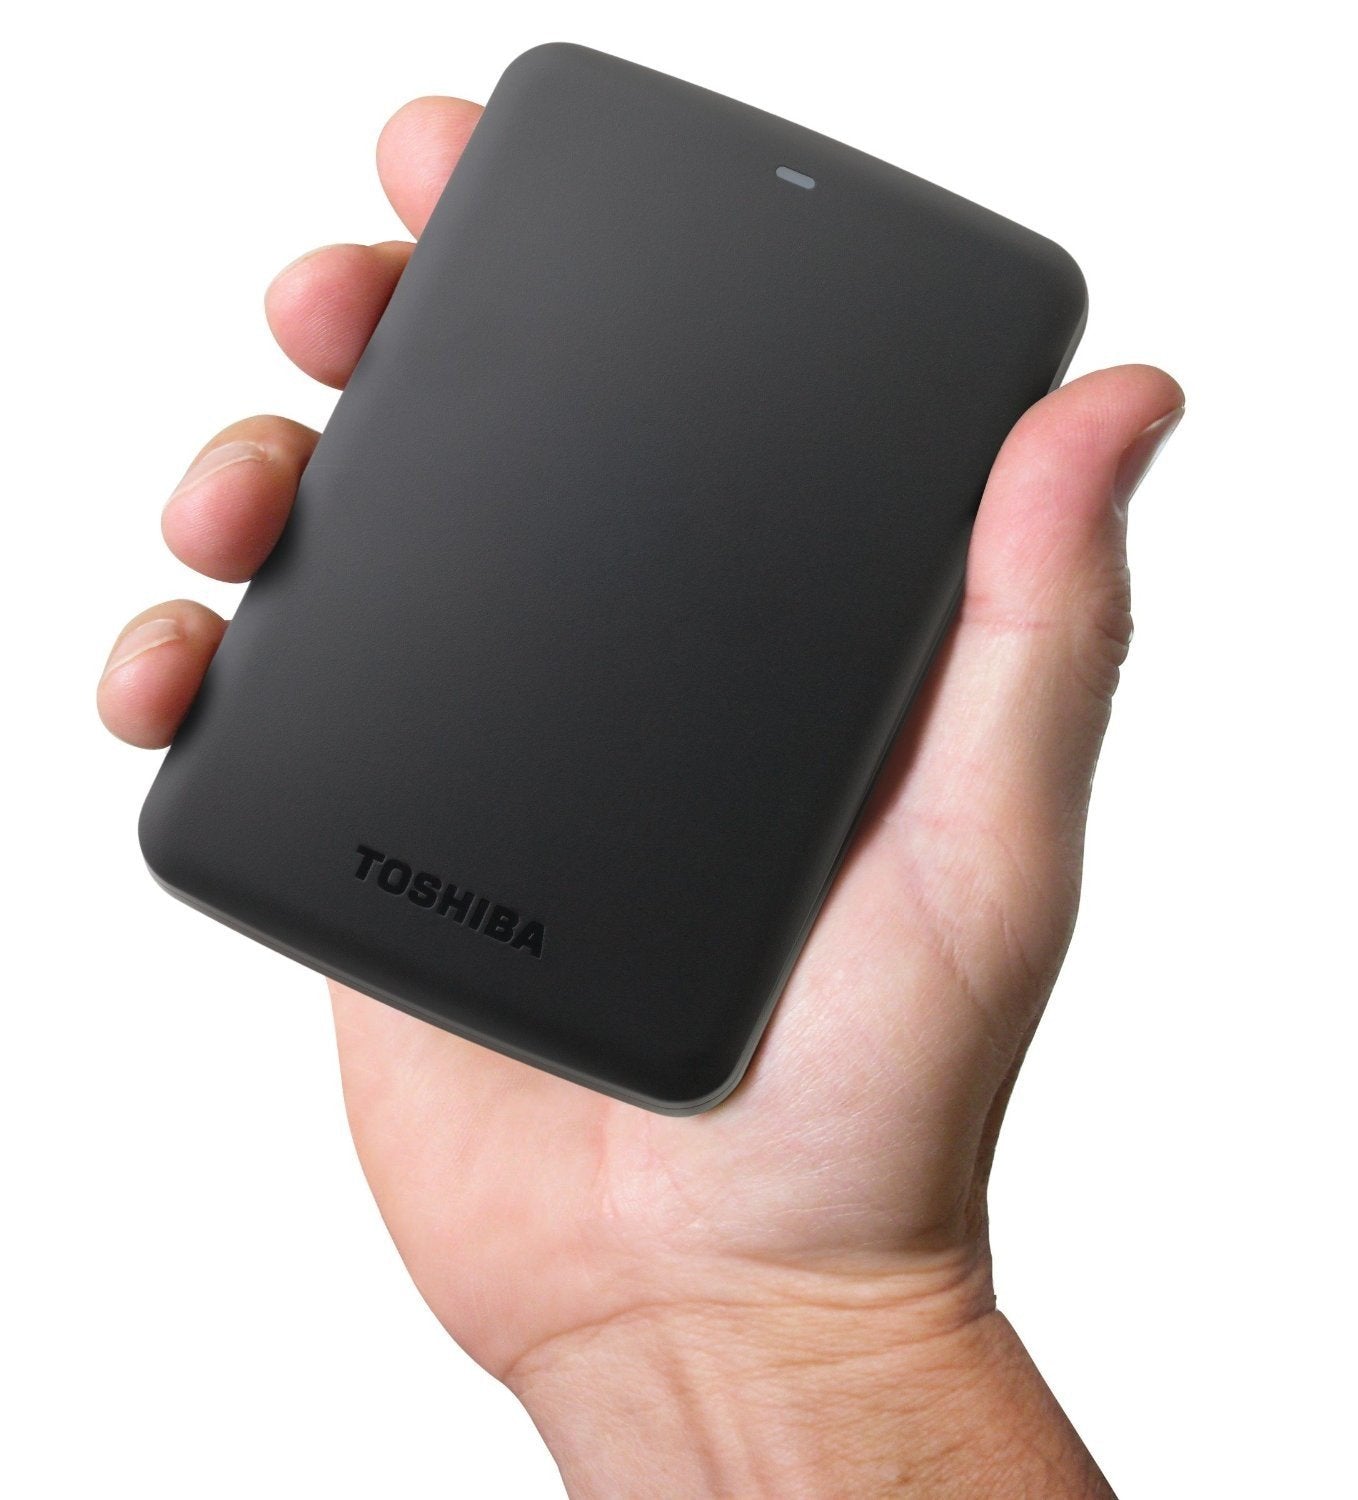 Disco duro externo Toshiba Canvio Basics 1TB, USB 3.0